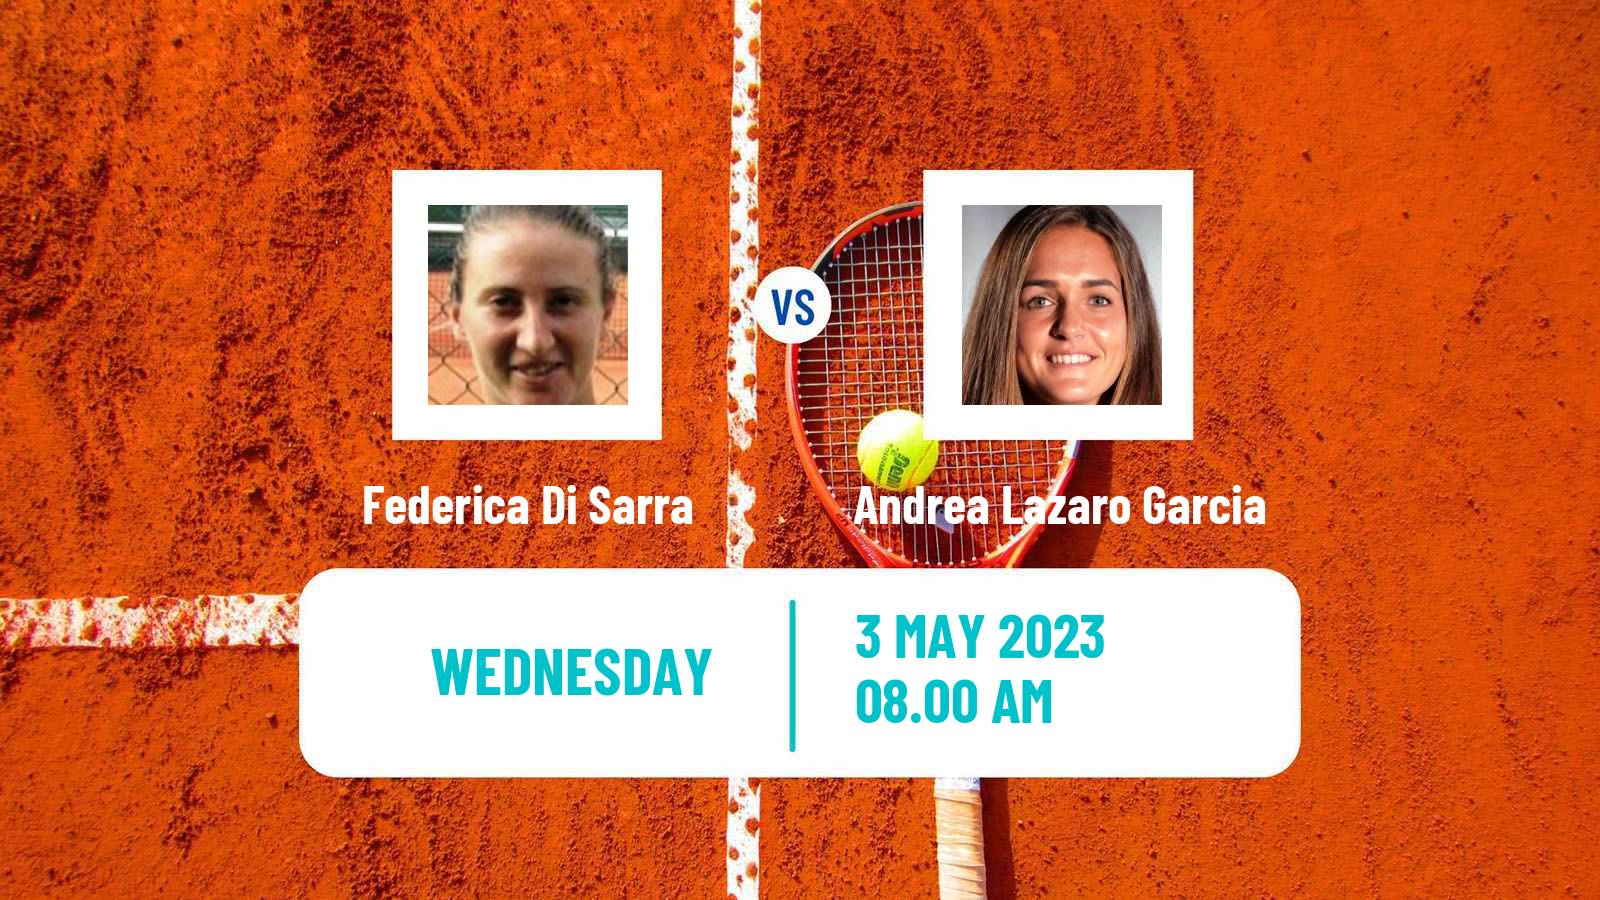 Tennis ITF Tournaments Federica Di Sarra - Andrea Lazaro Garcia